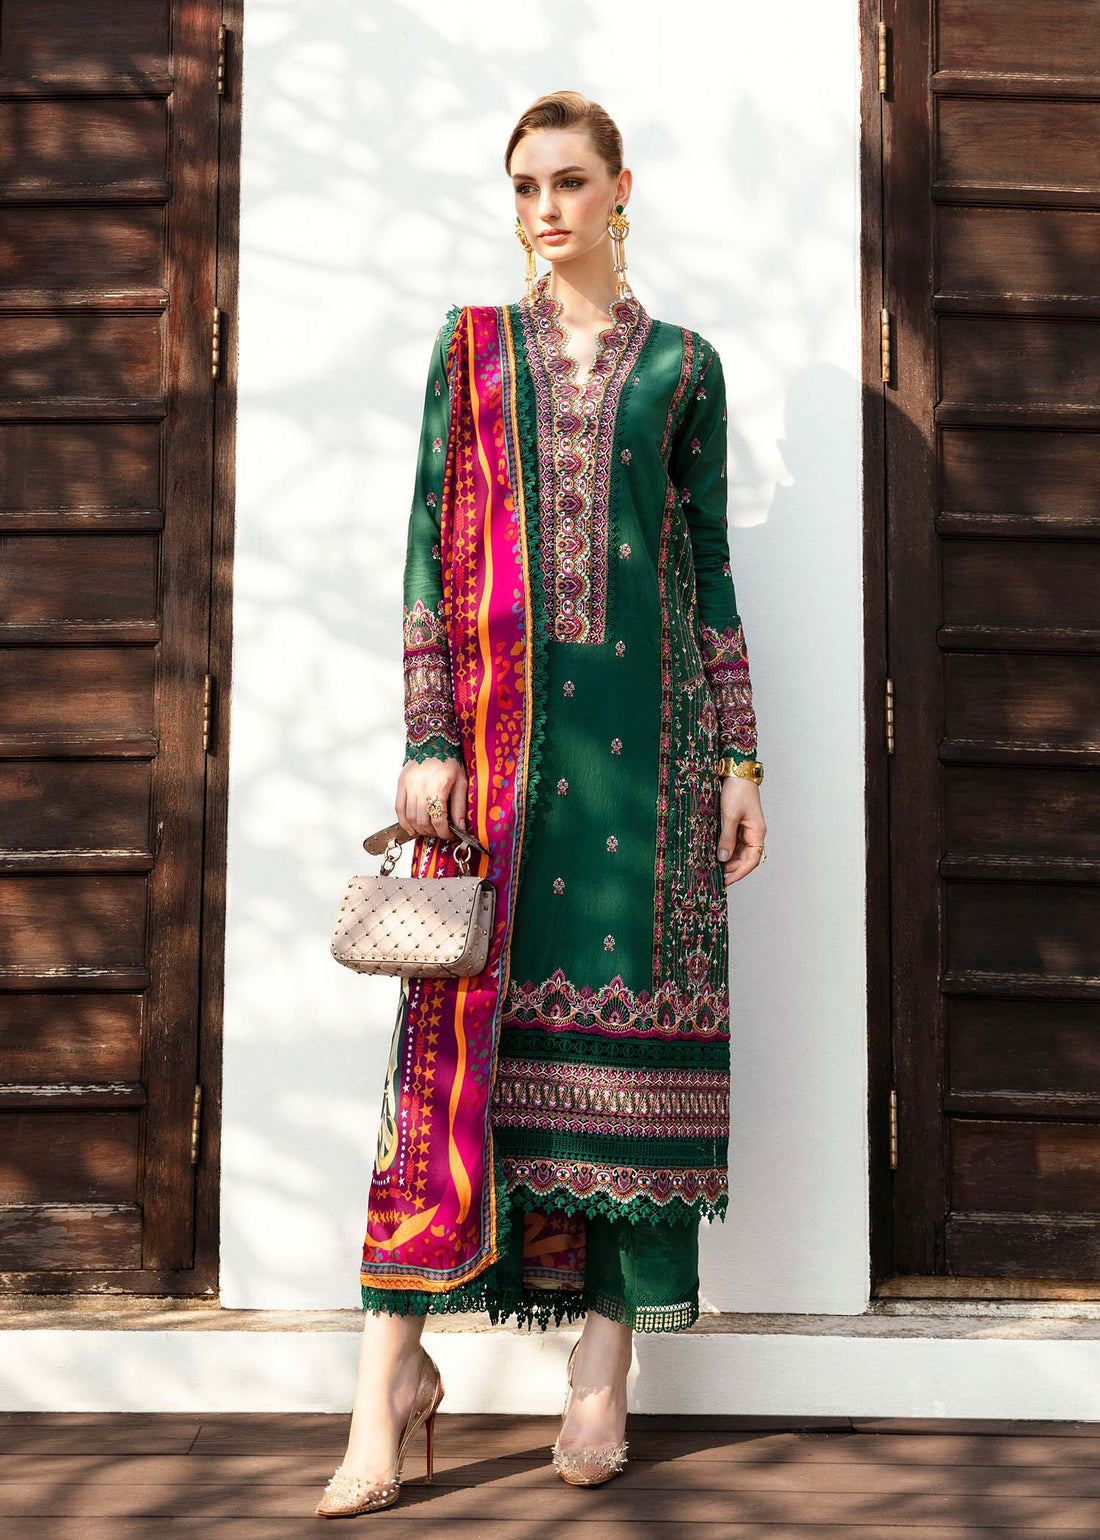 kanwal Malik | Mayal Luxury Lawn | Zoha - Khanumjan  Pakistani Clothes and Designer Dresses in UK, USA 